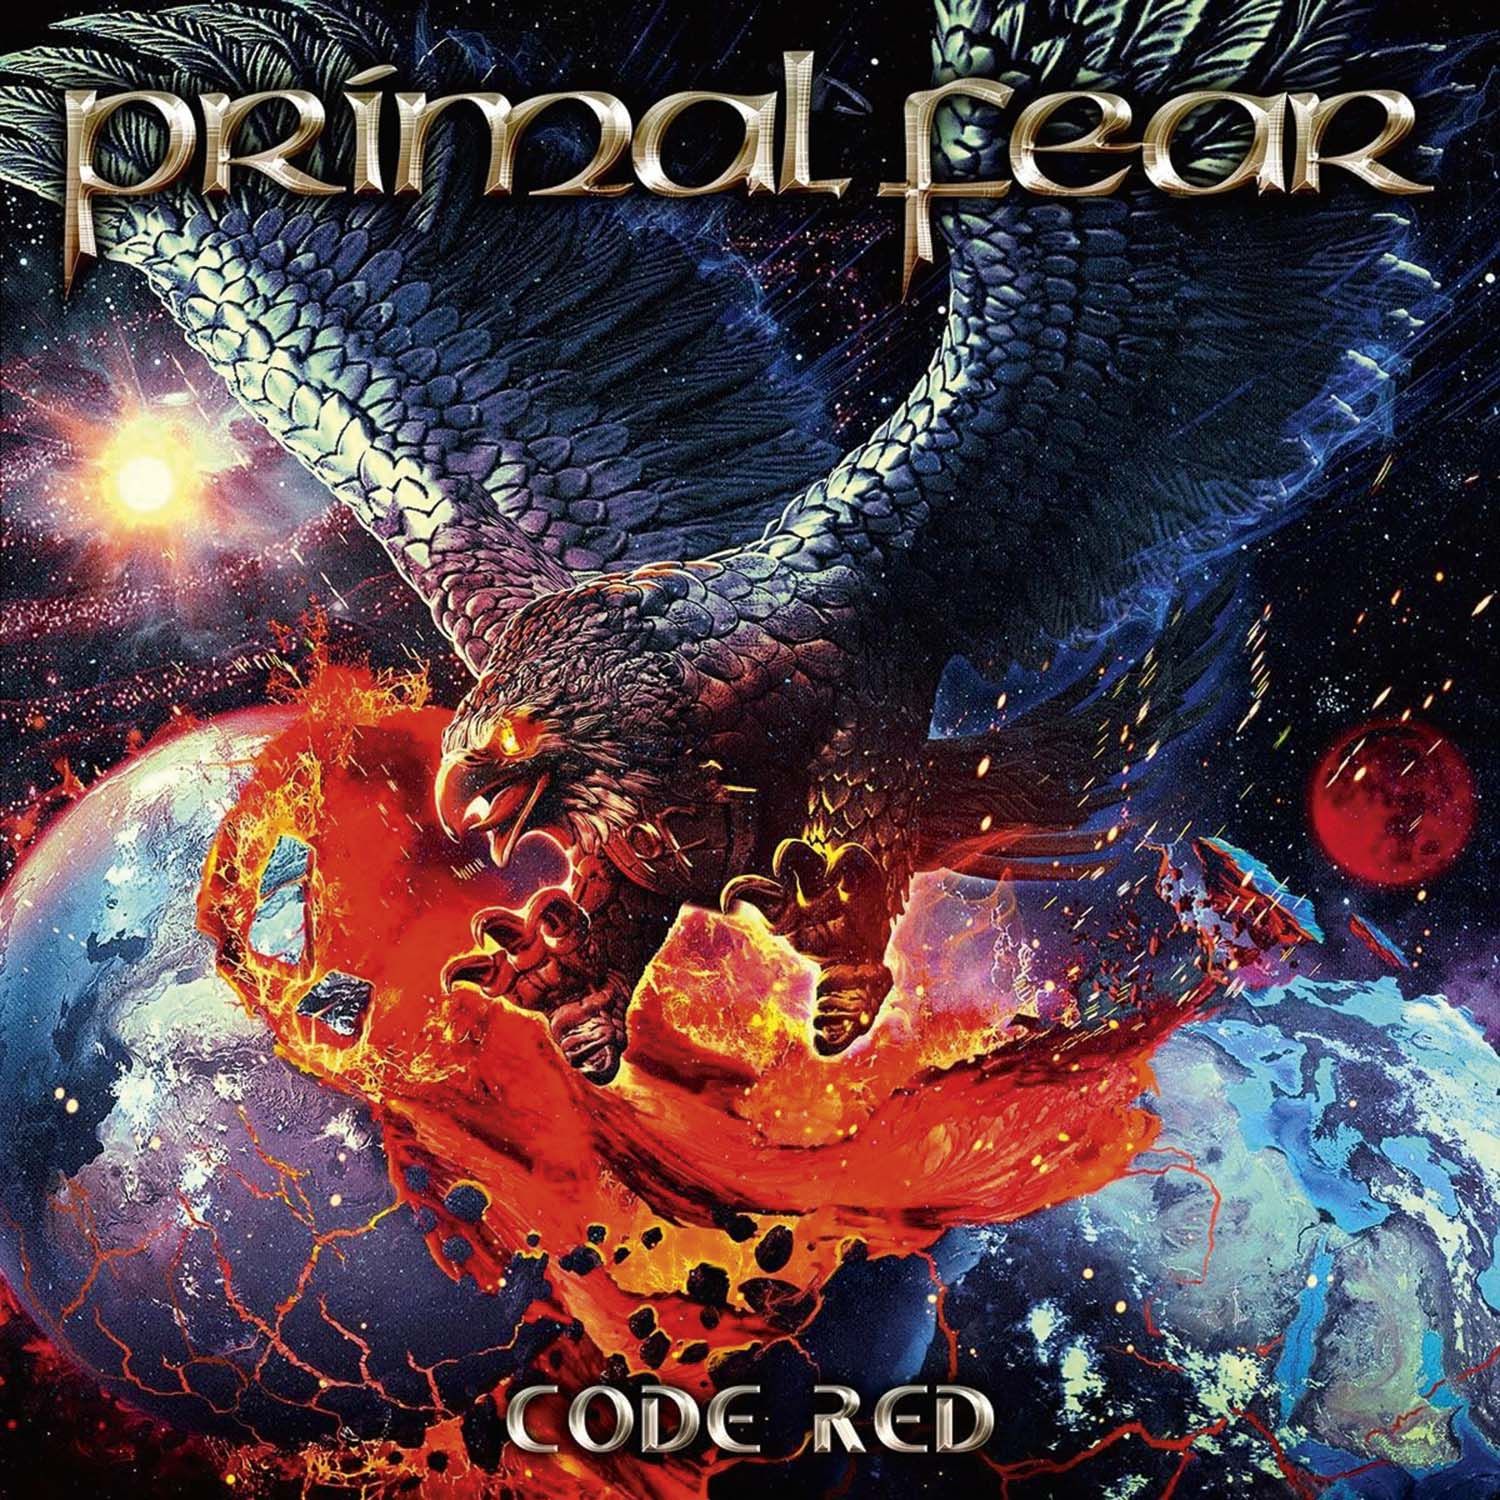 Primal Fear - "Code Red"